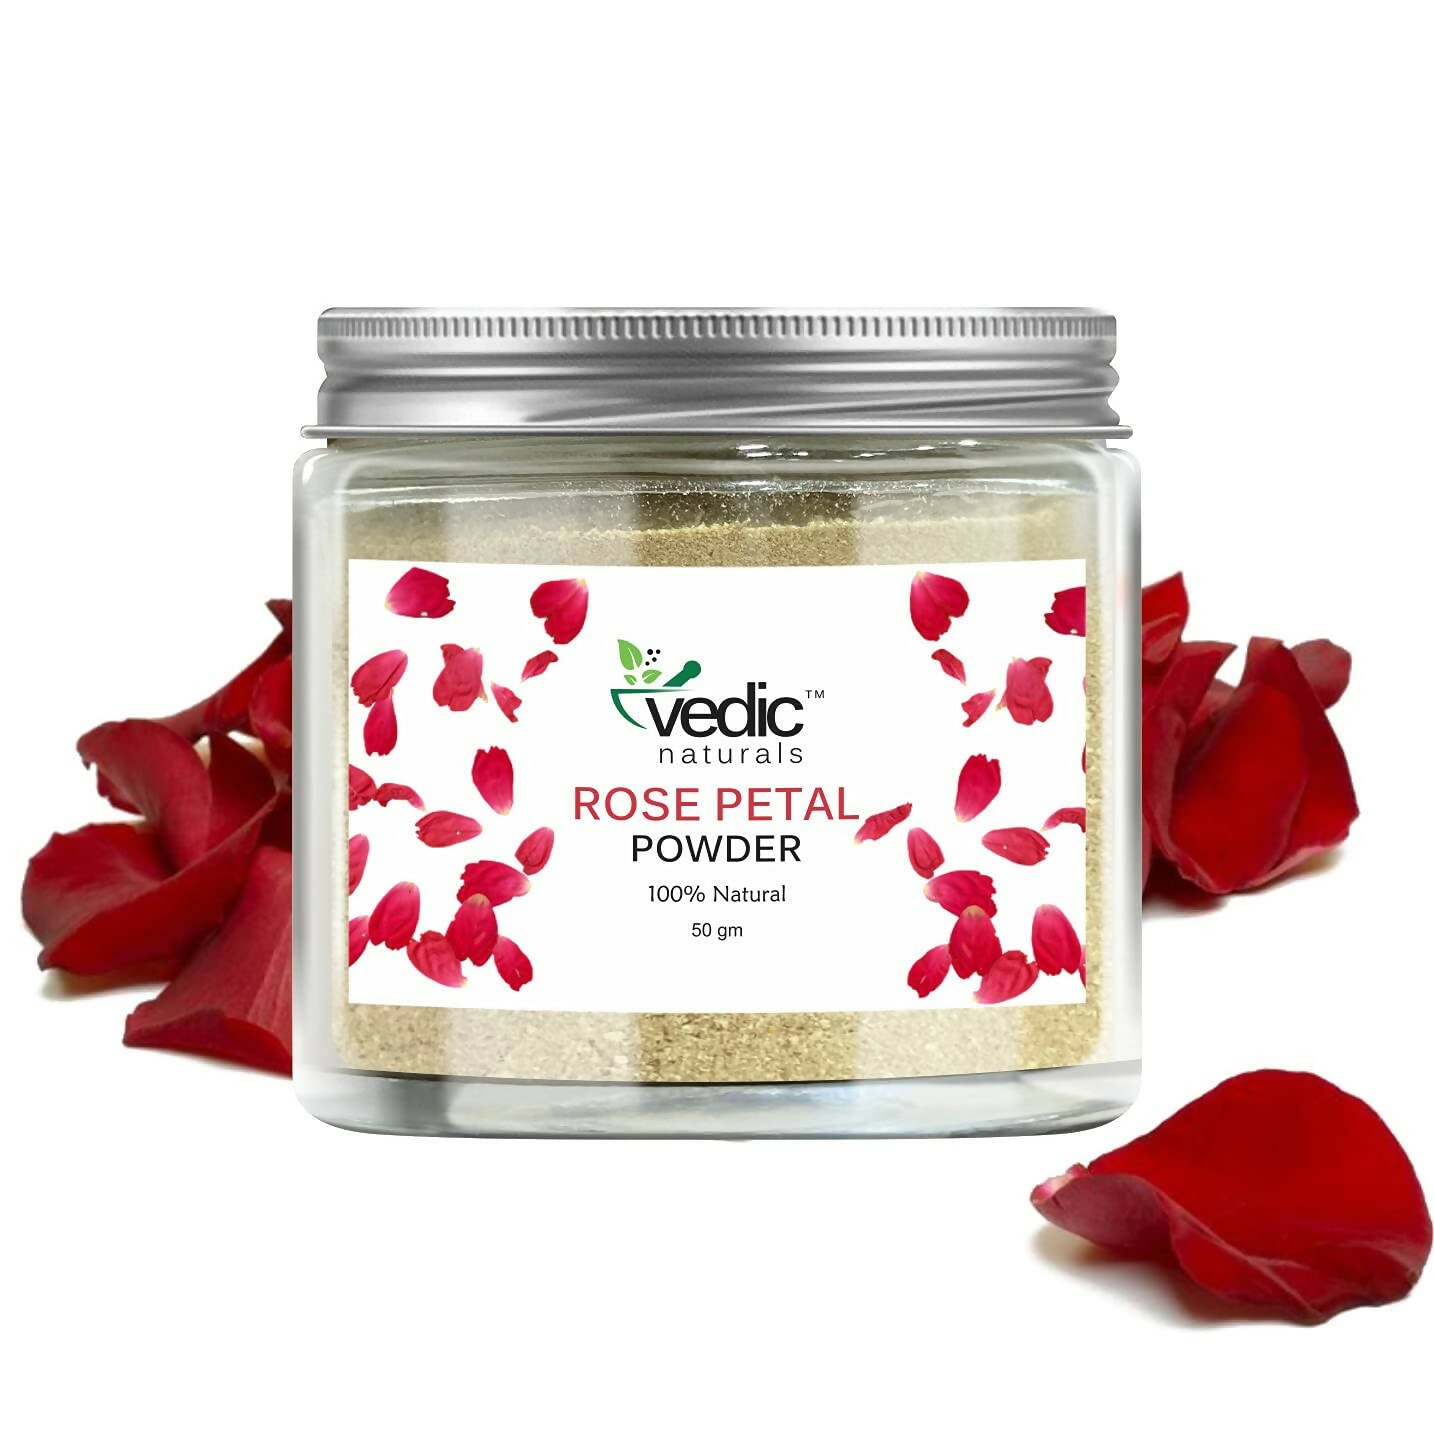 Vedic Naturals Rose Petal Powder Face Pack - usa canada australia